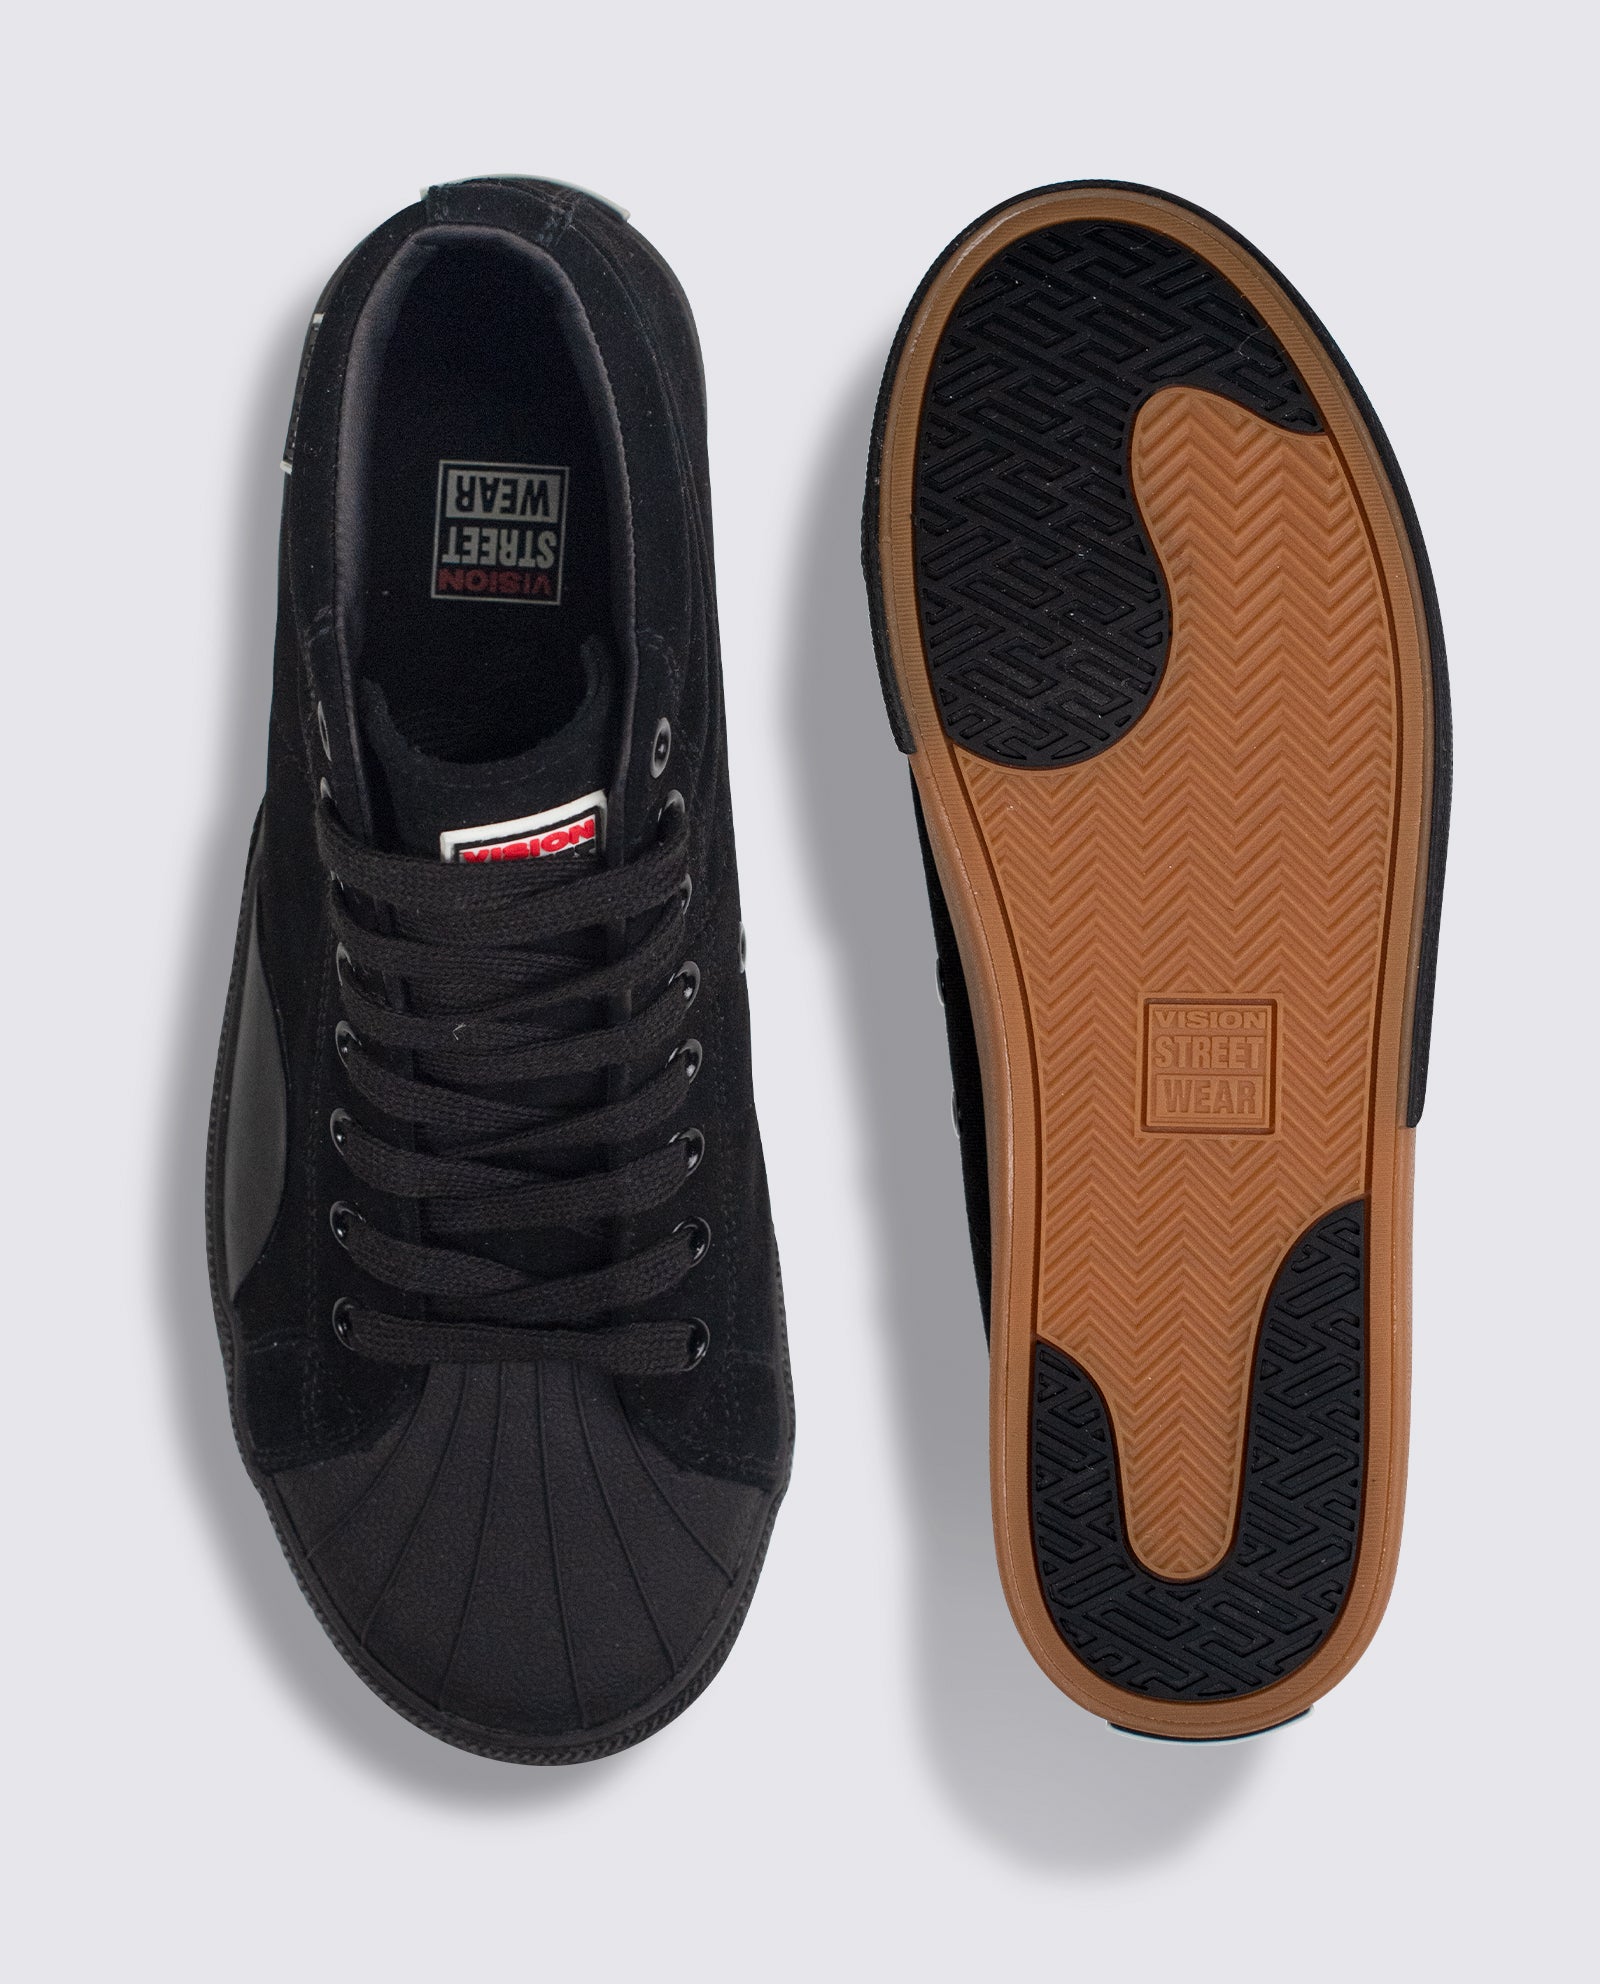 Vision Street Wear Leather Suede High Top Skateboard Sneakers Black